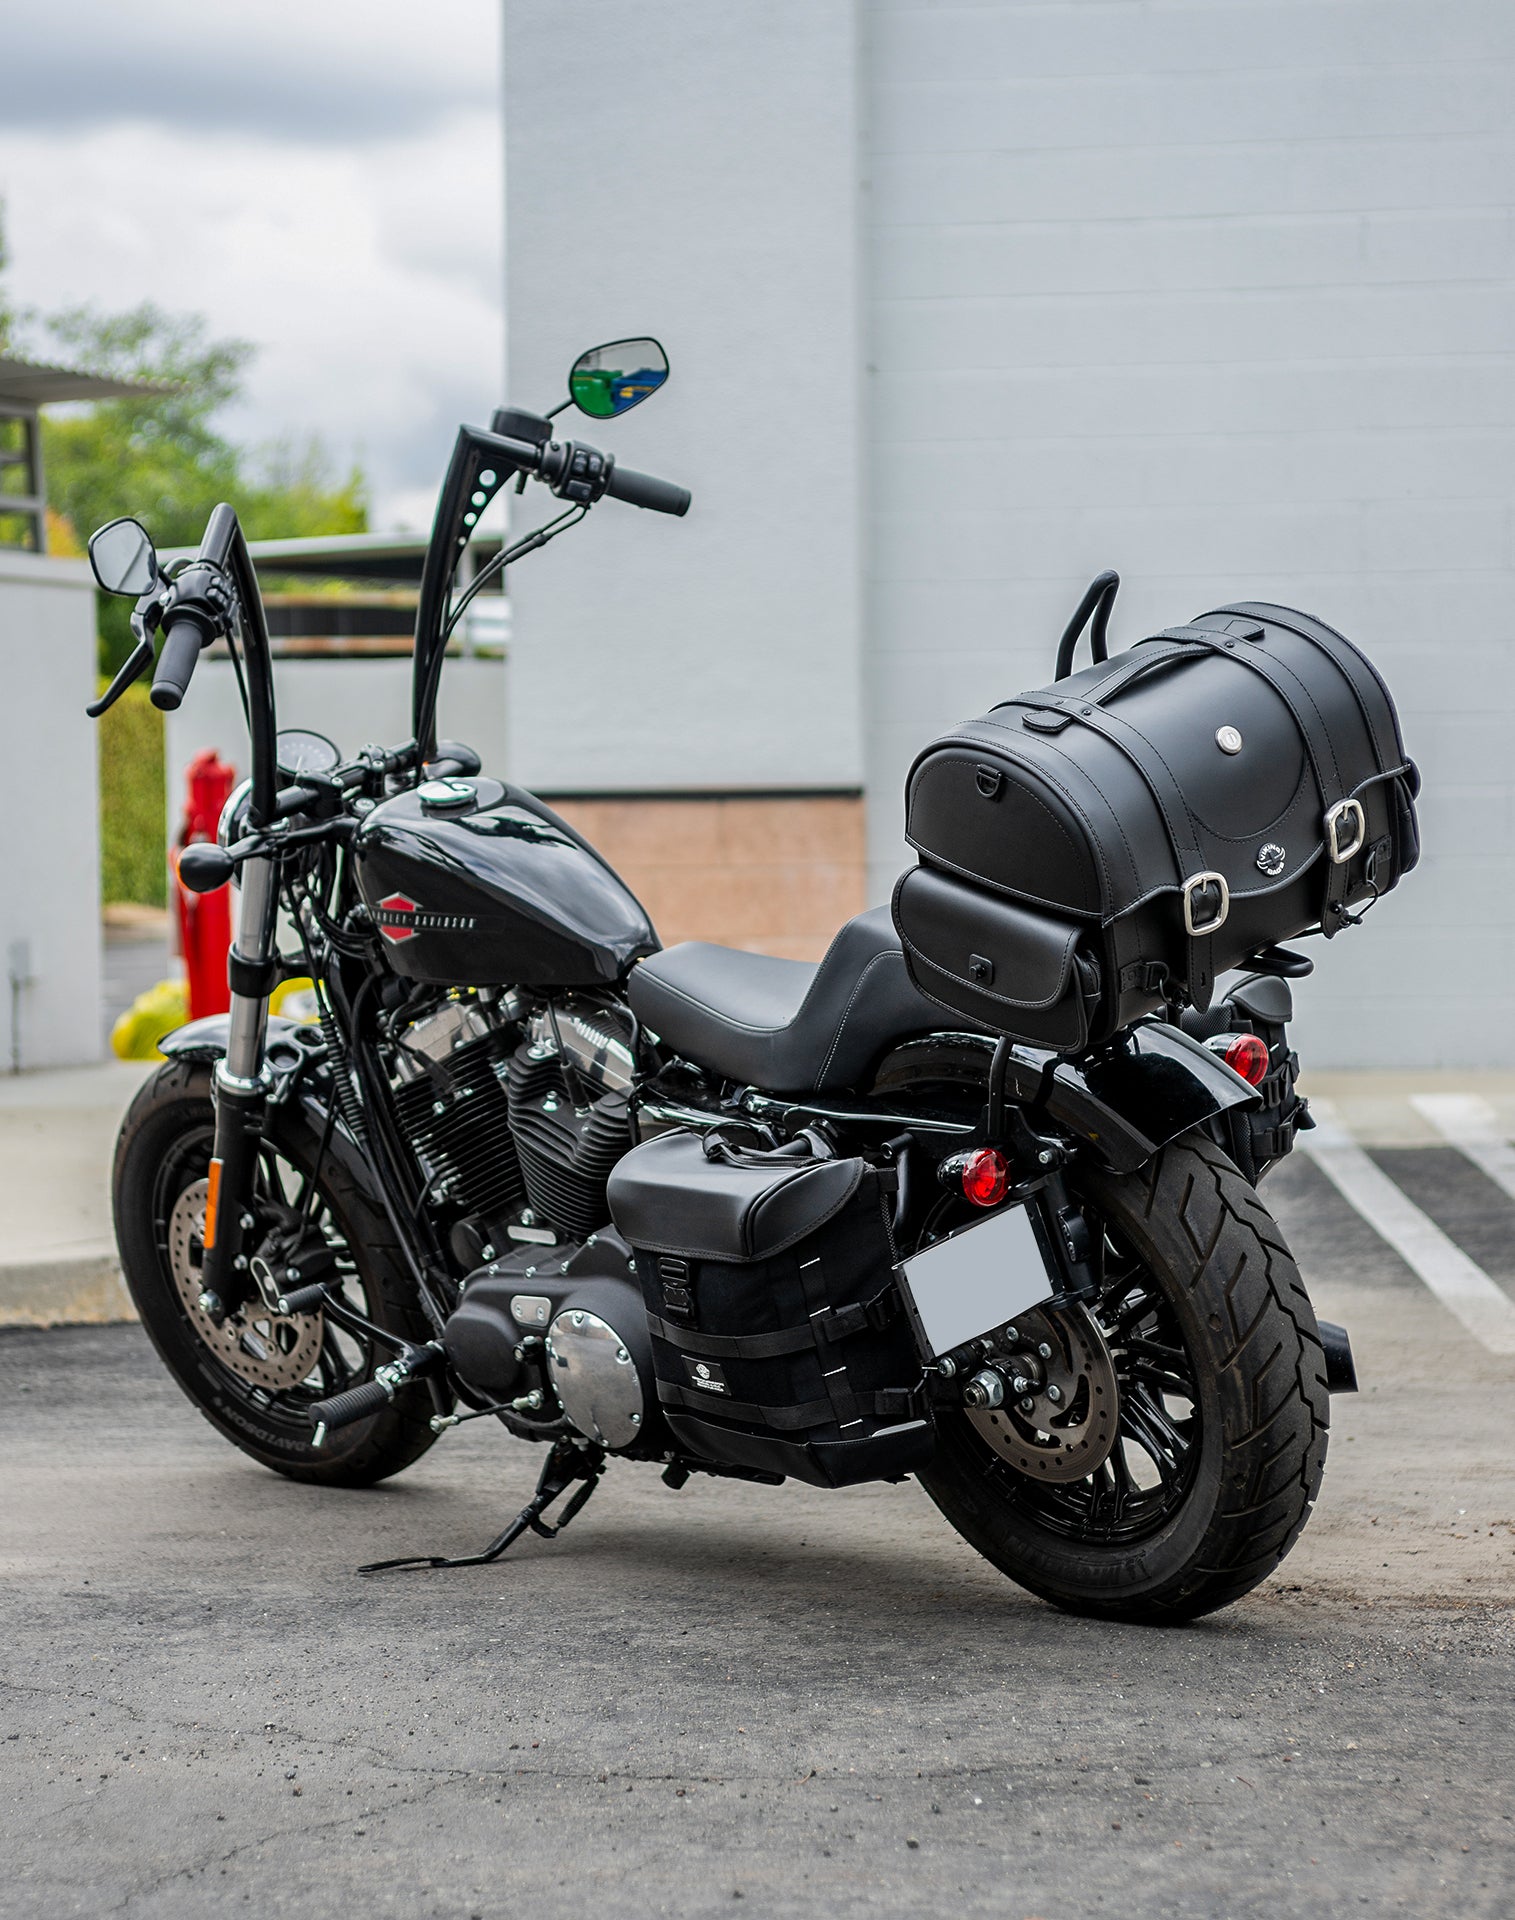 18L - Century Medium Honda Leather Motorcycle Sissy Bar Bag